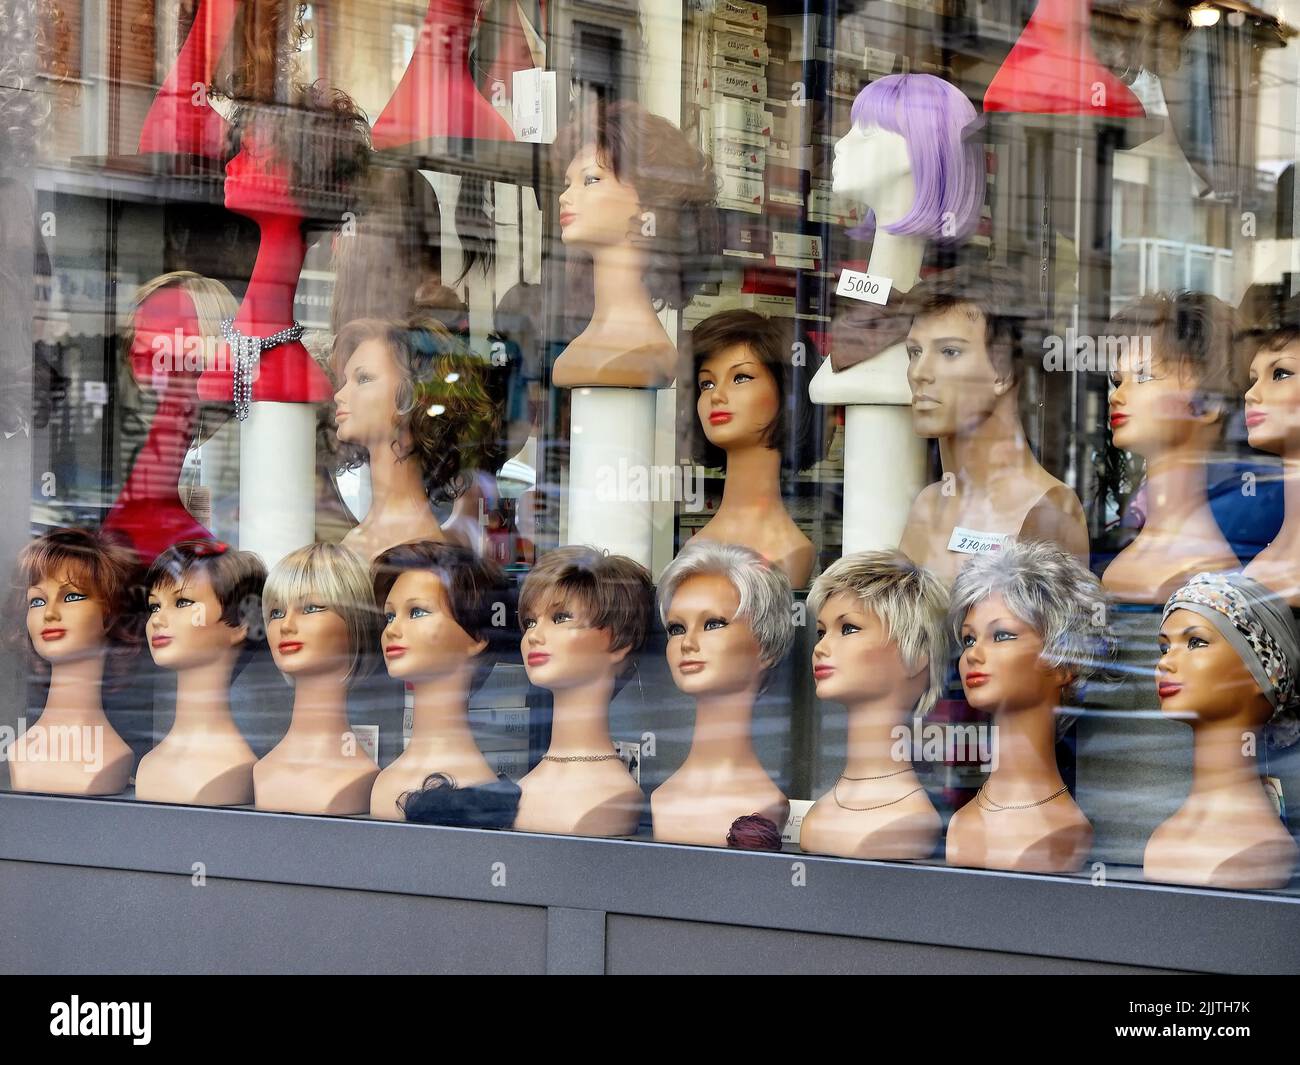 Una bella foto di una vetrata con diversi tipi di parrucche Foto Stock